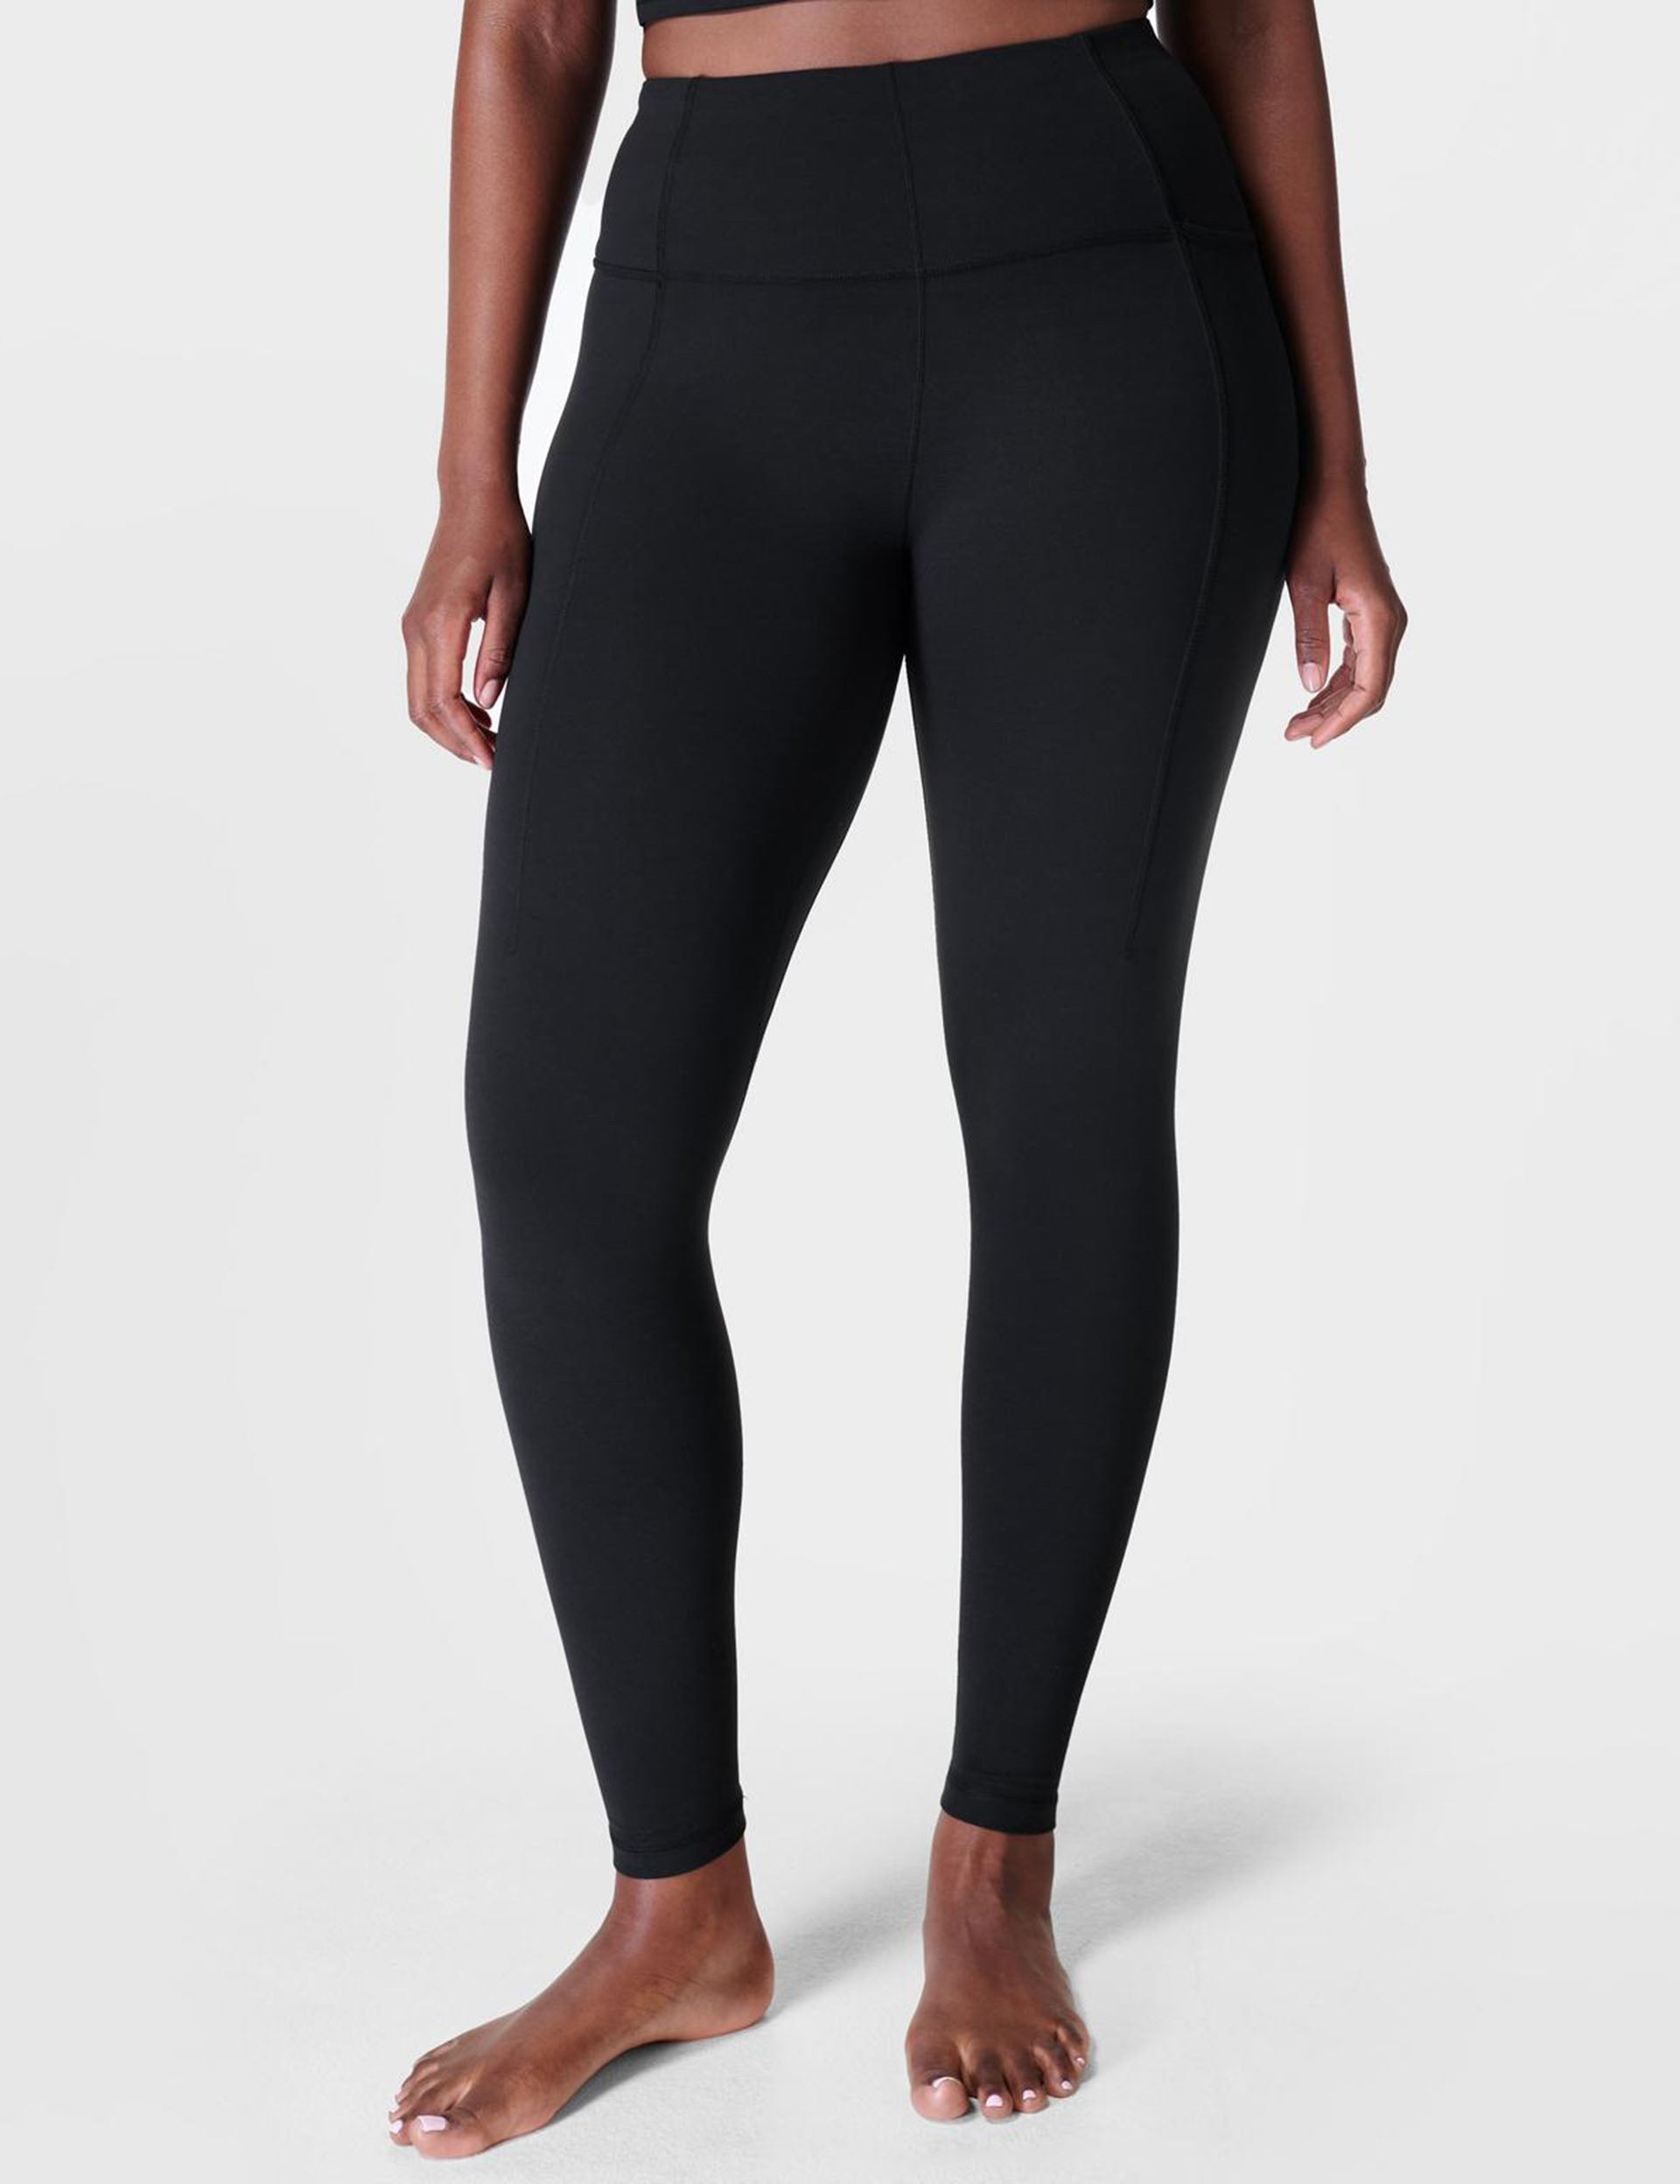 sweaty betty super soft yoga leggings - black - xs